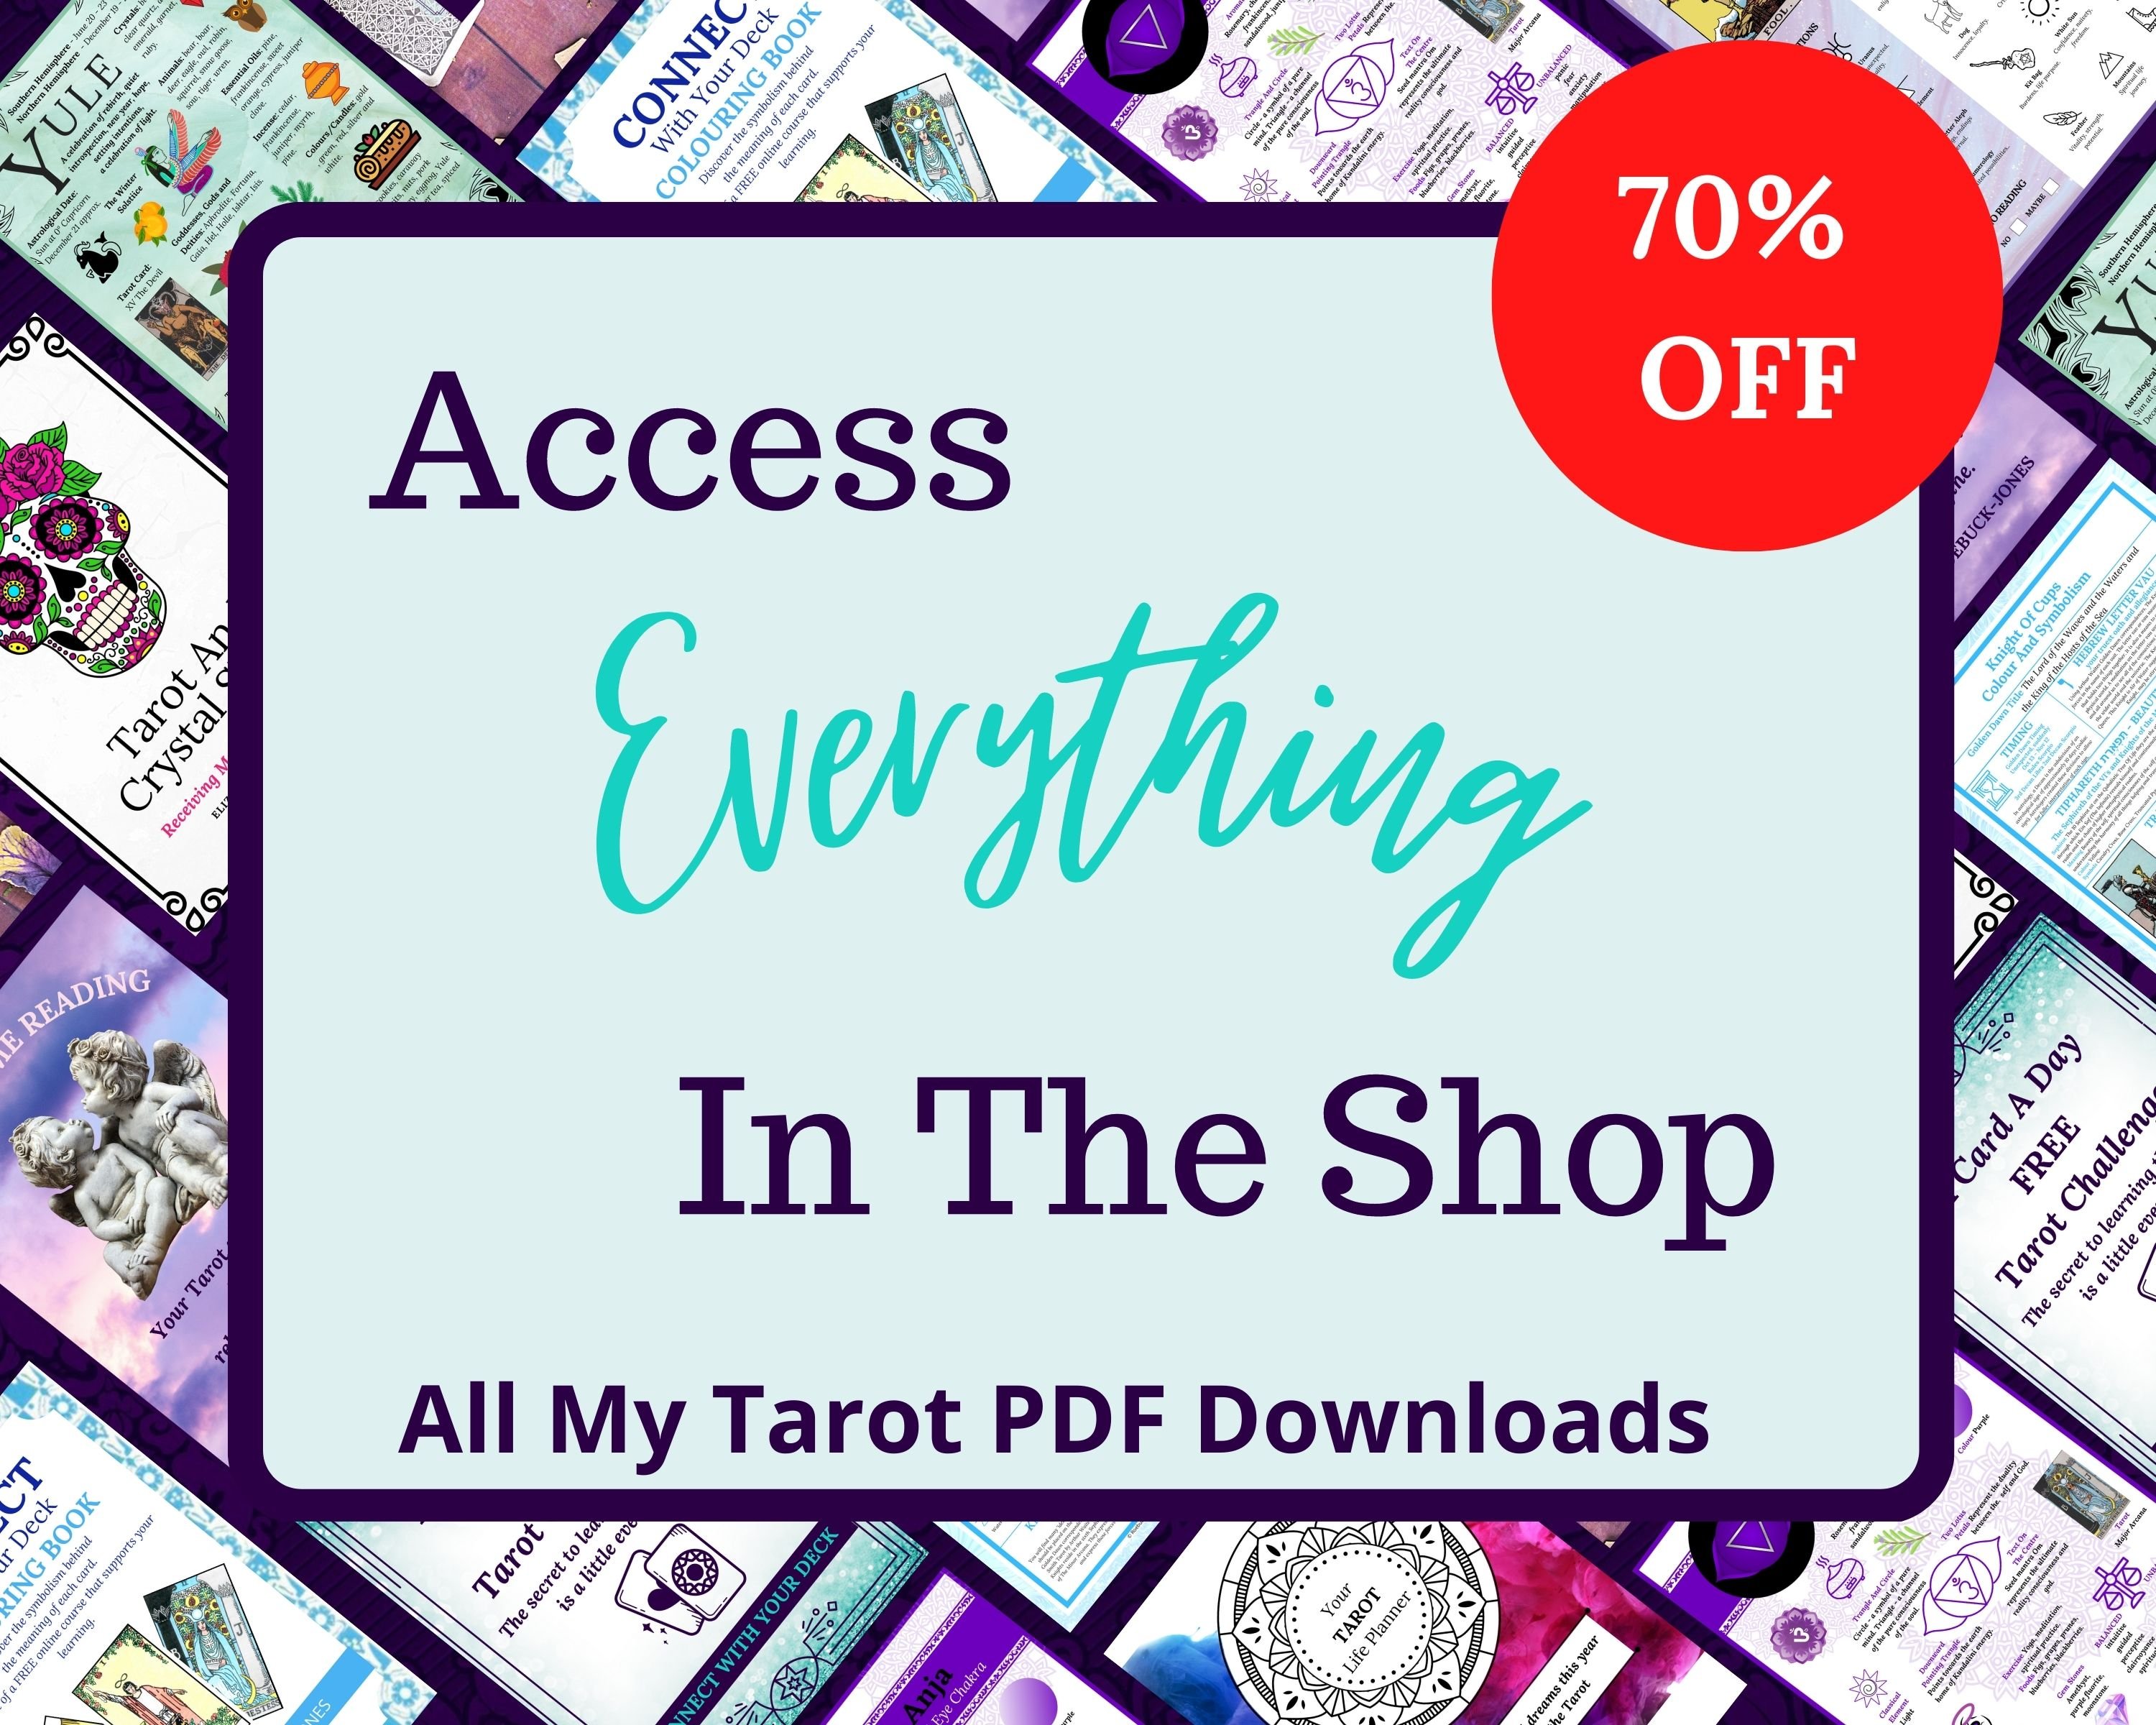 Tarot For Beginners FREE Online Course workbook